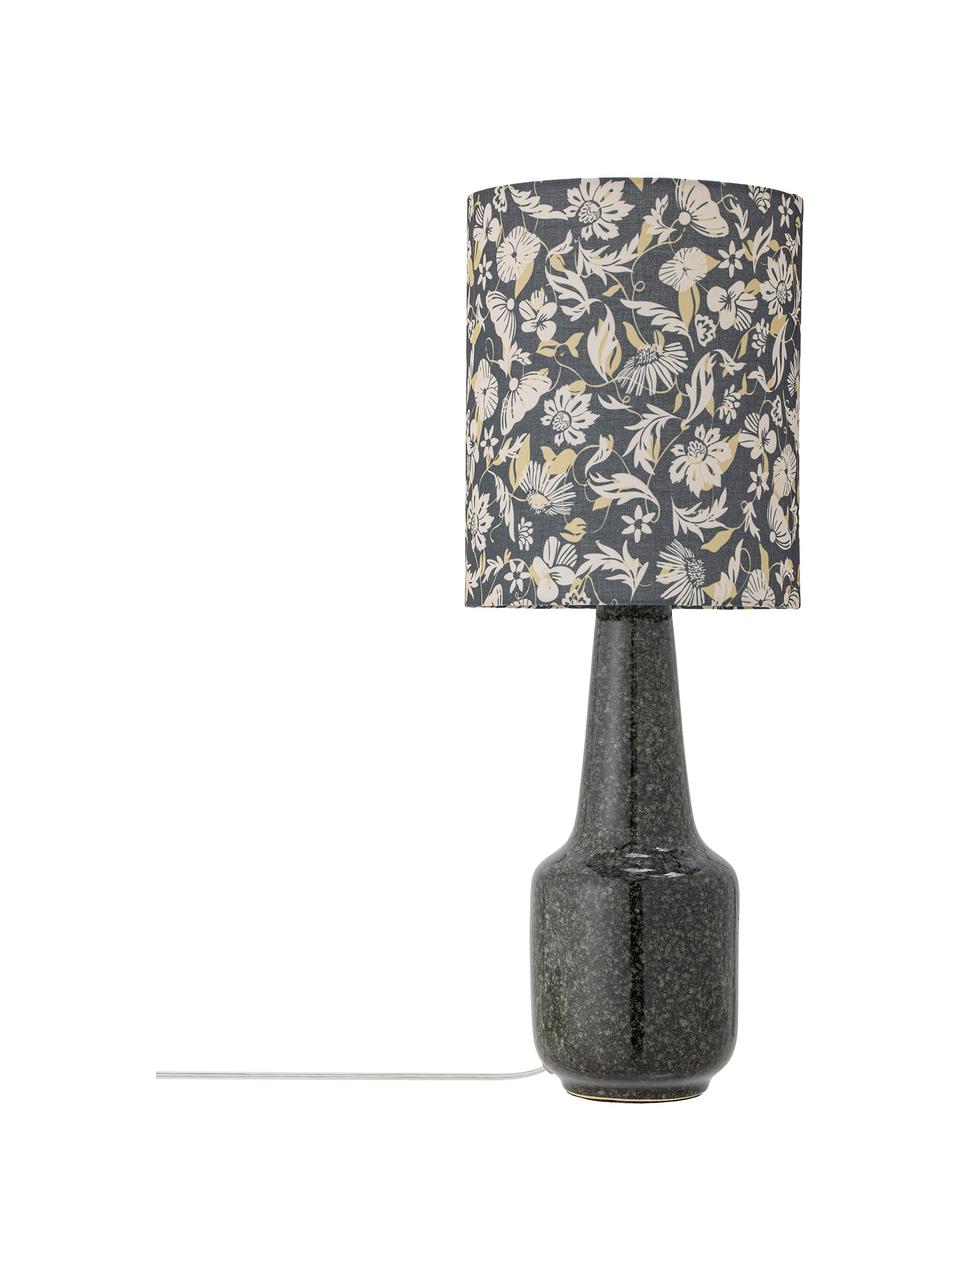 Grote tafellamp Olefine met bloemmotief, Lampenkap: stof, Lampvoet: keramiek, Groen- en zwarttinten, Ø 23 x H 62 cm